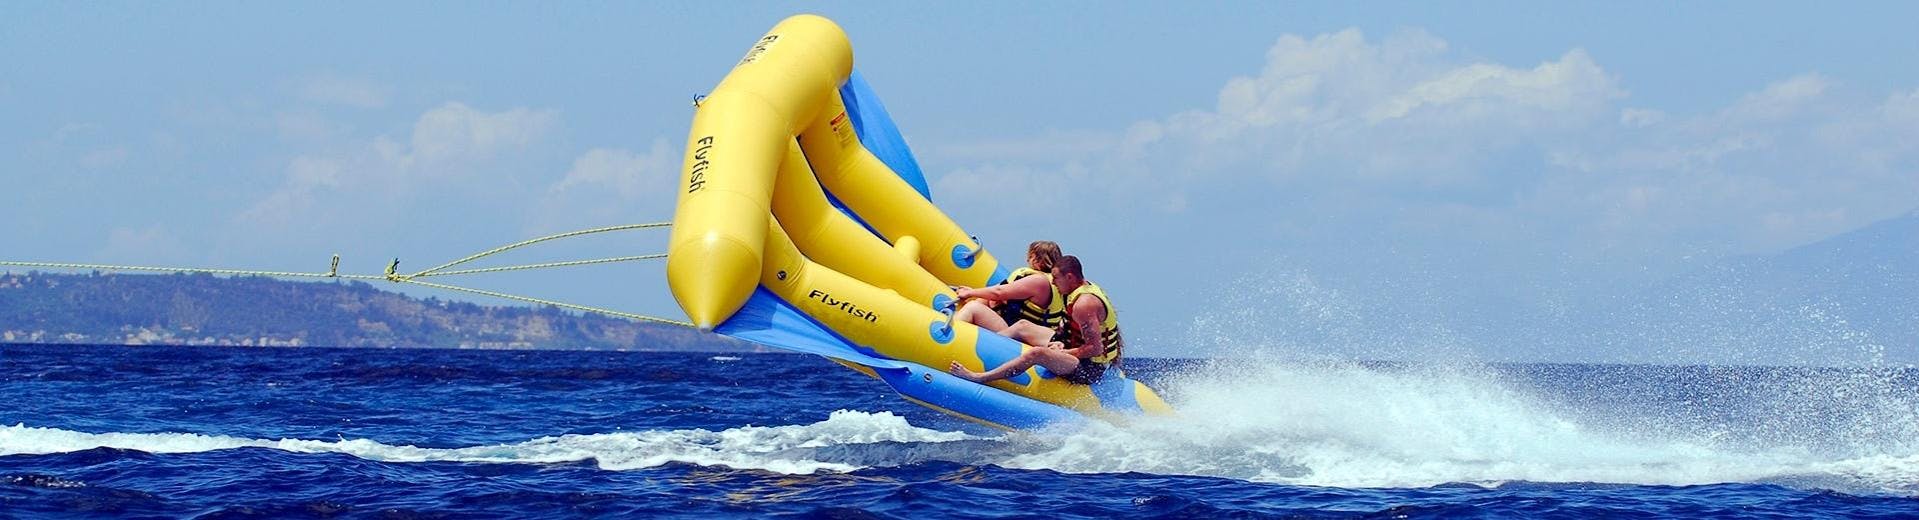 People enjoying aboard an inflatable at Banana Beach.